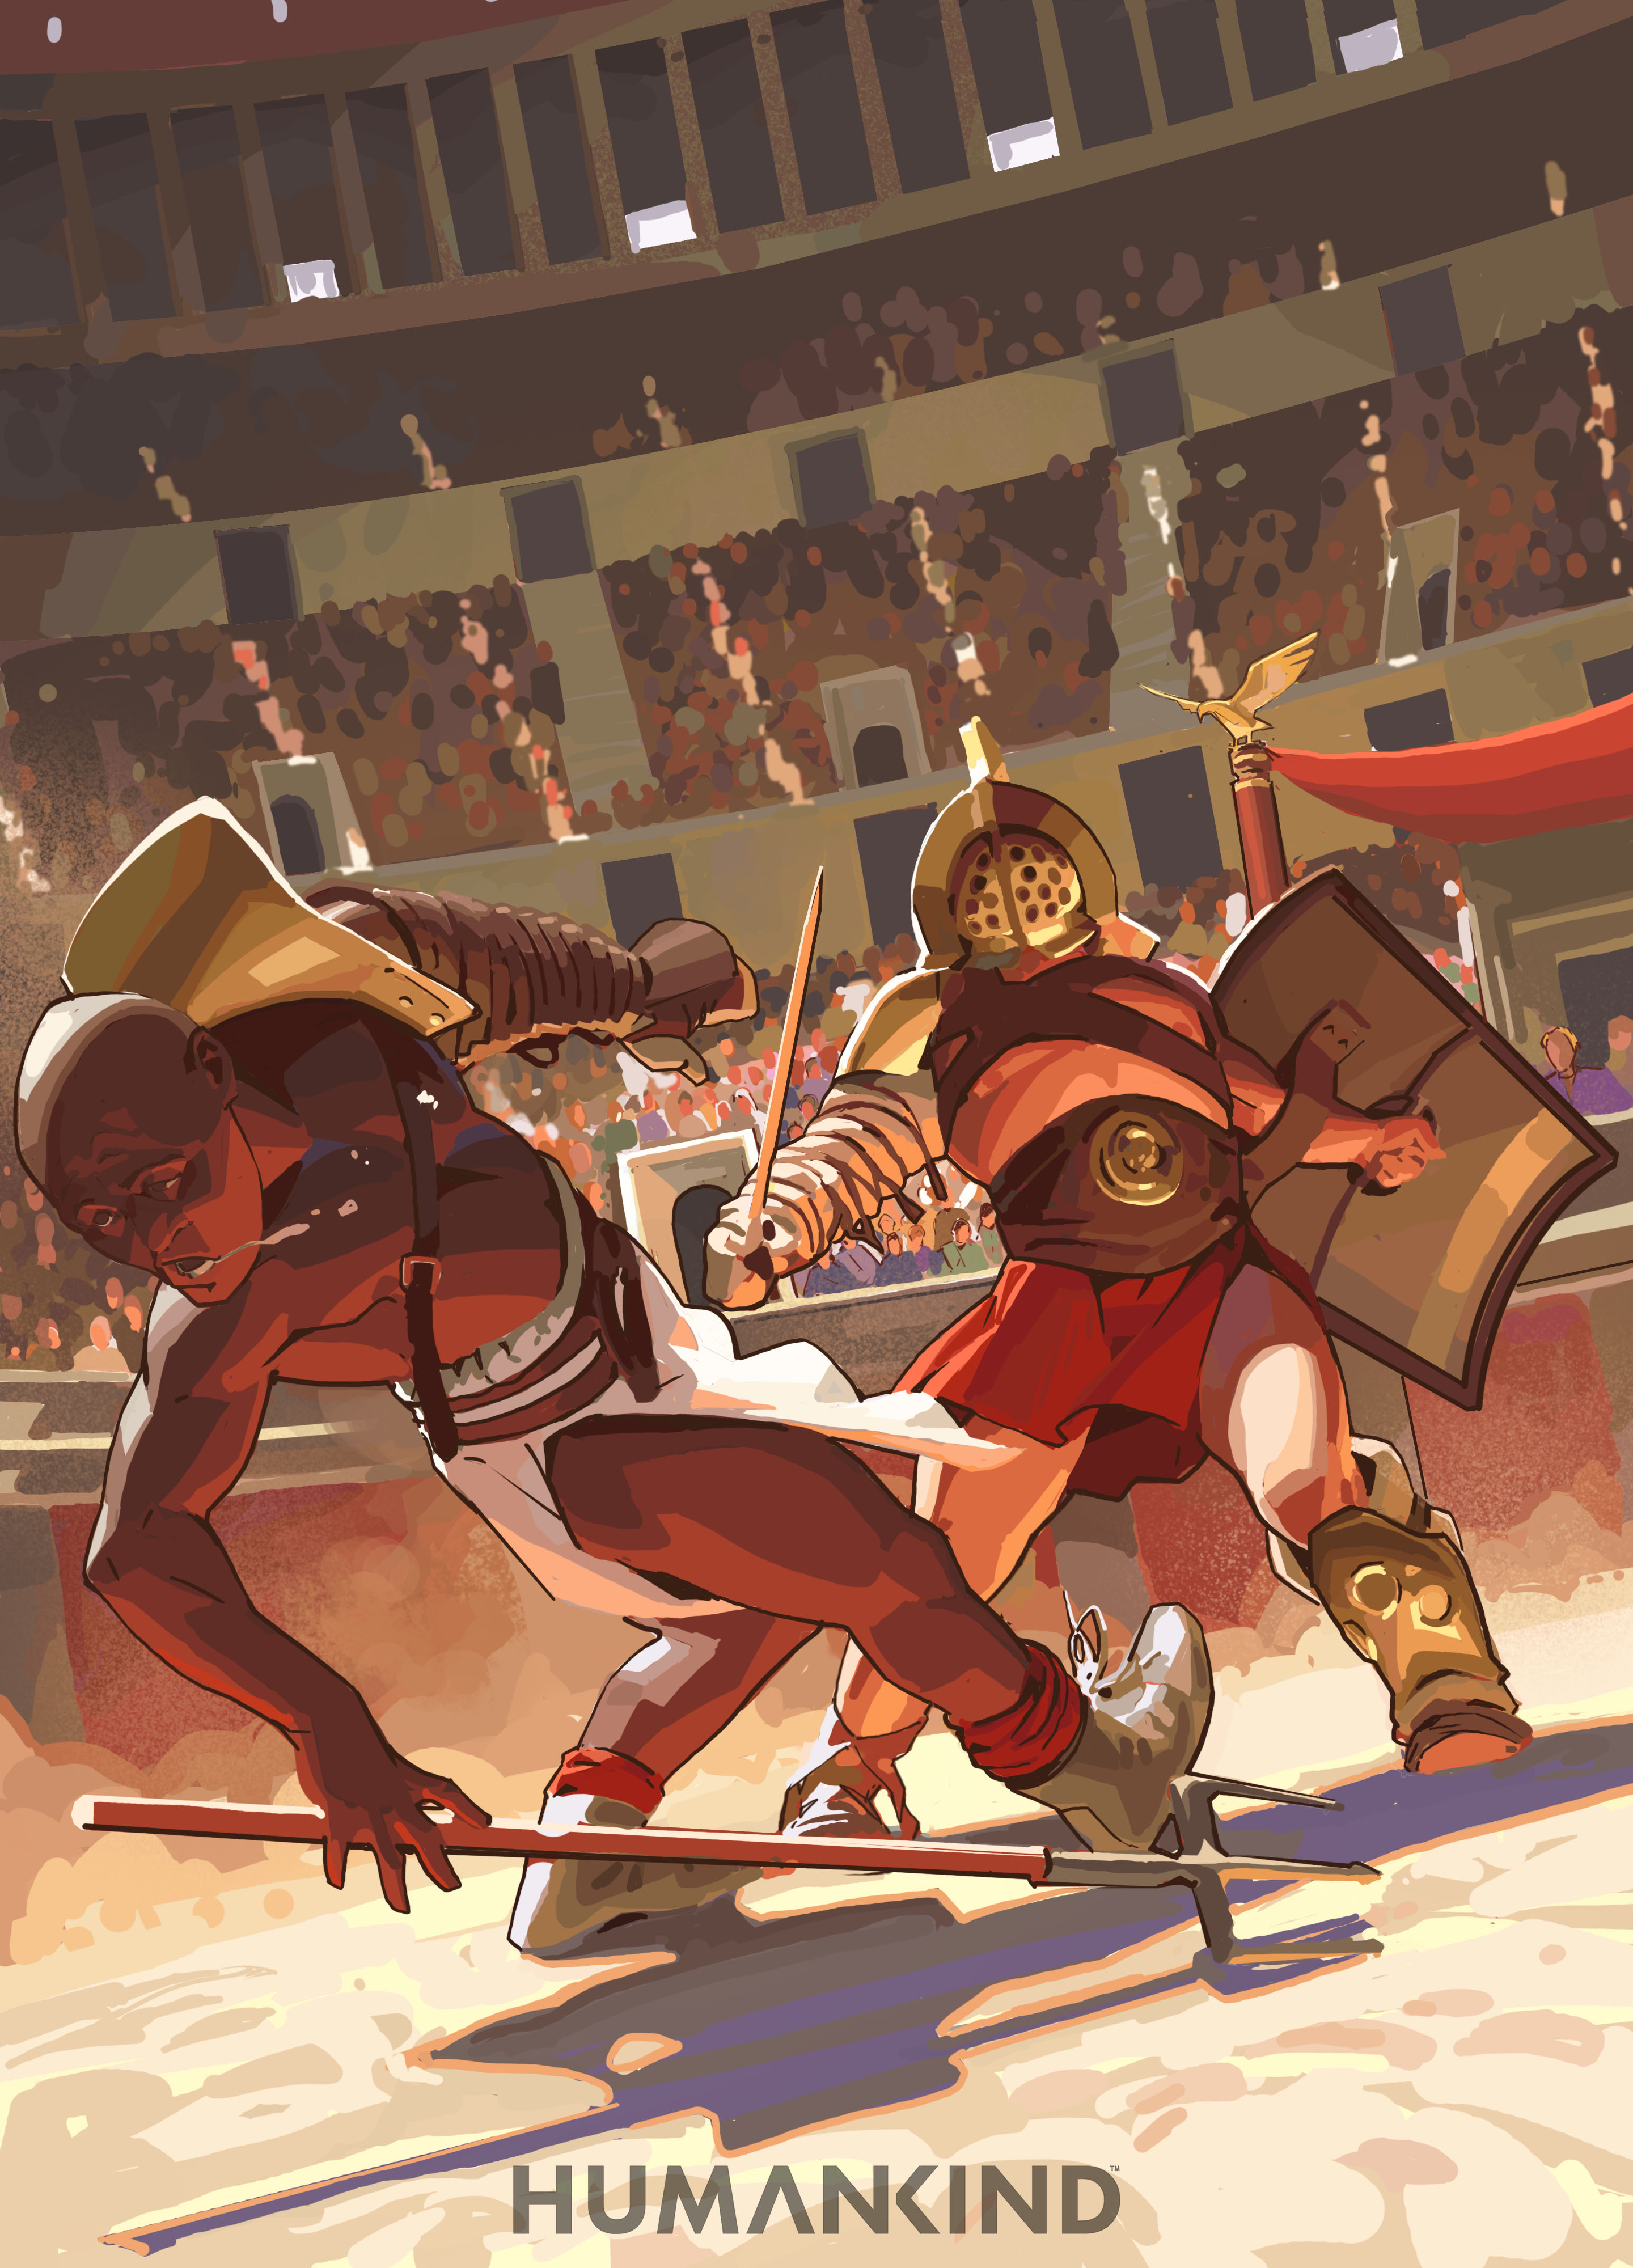 Gladiators, combatants at games